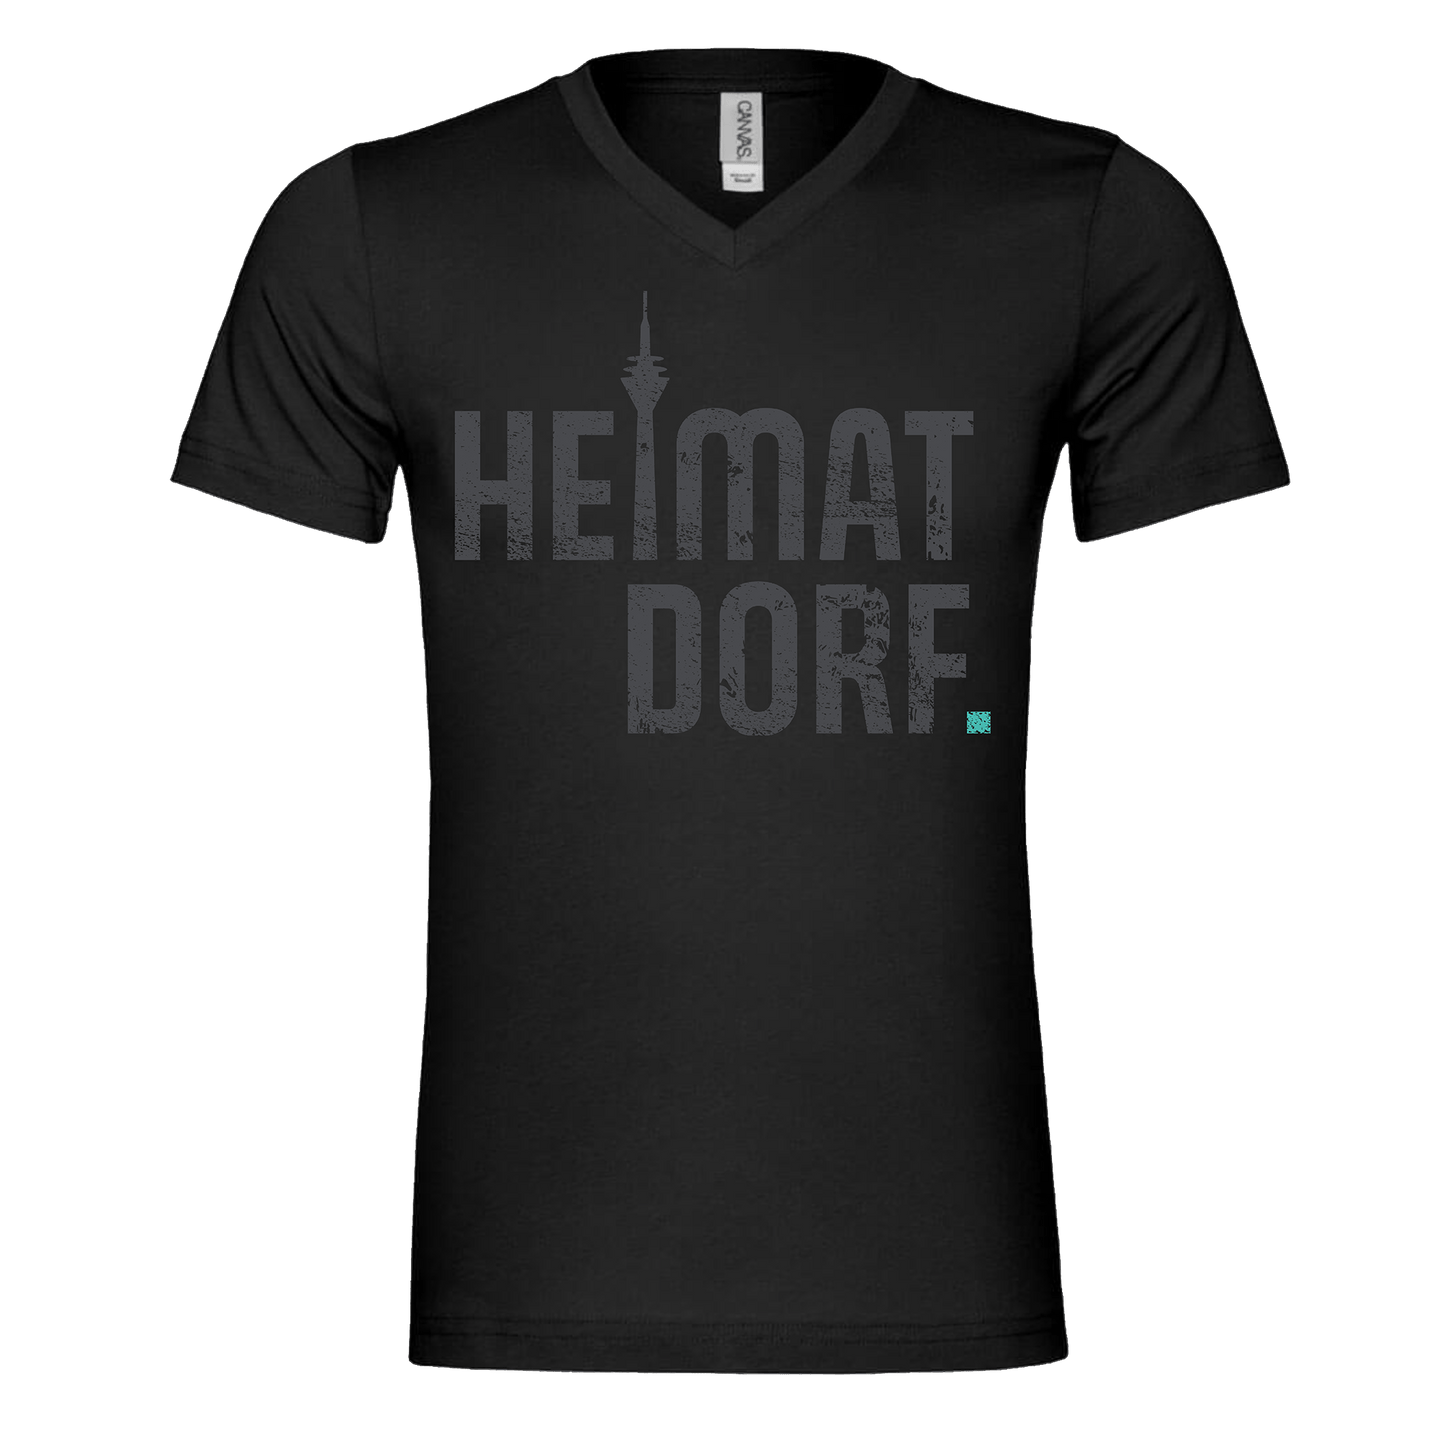 HeimatDorf T-Shirt V-Neck